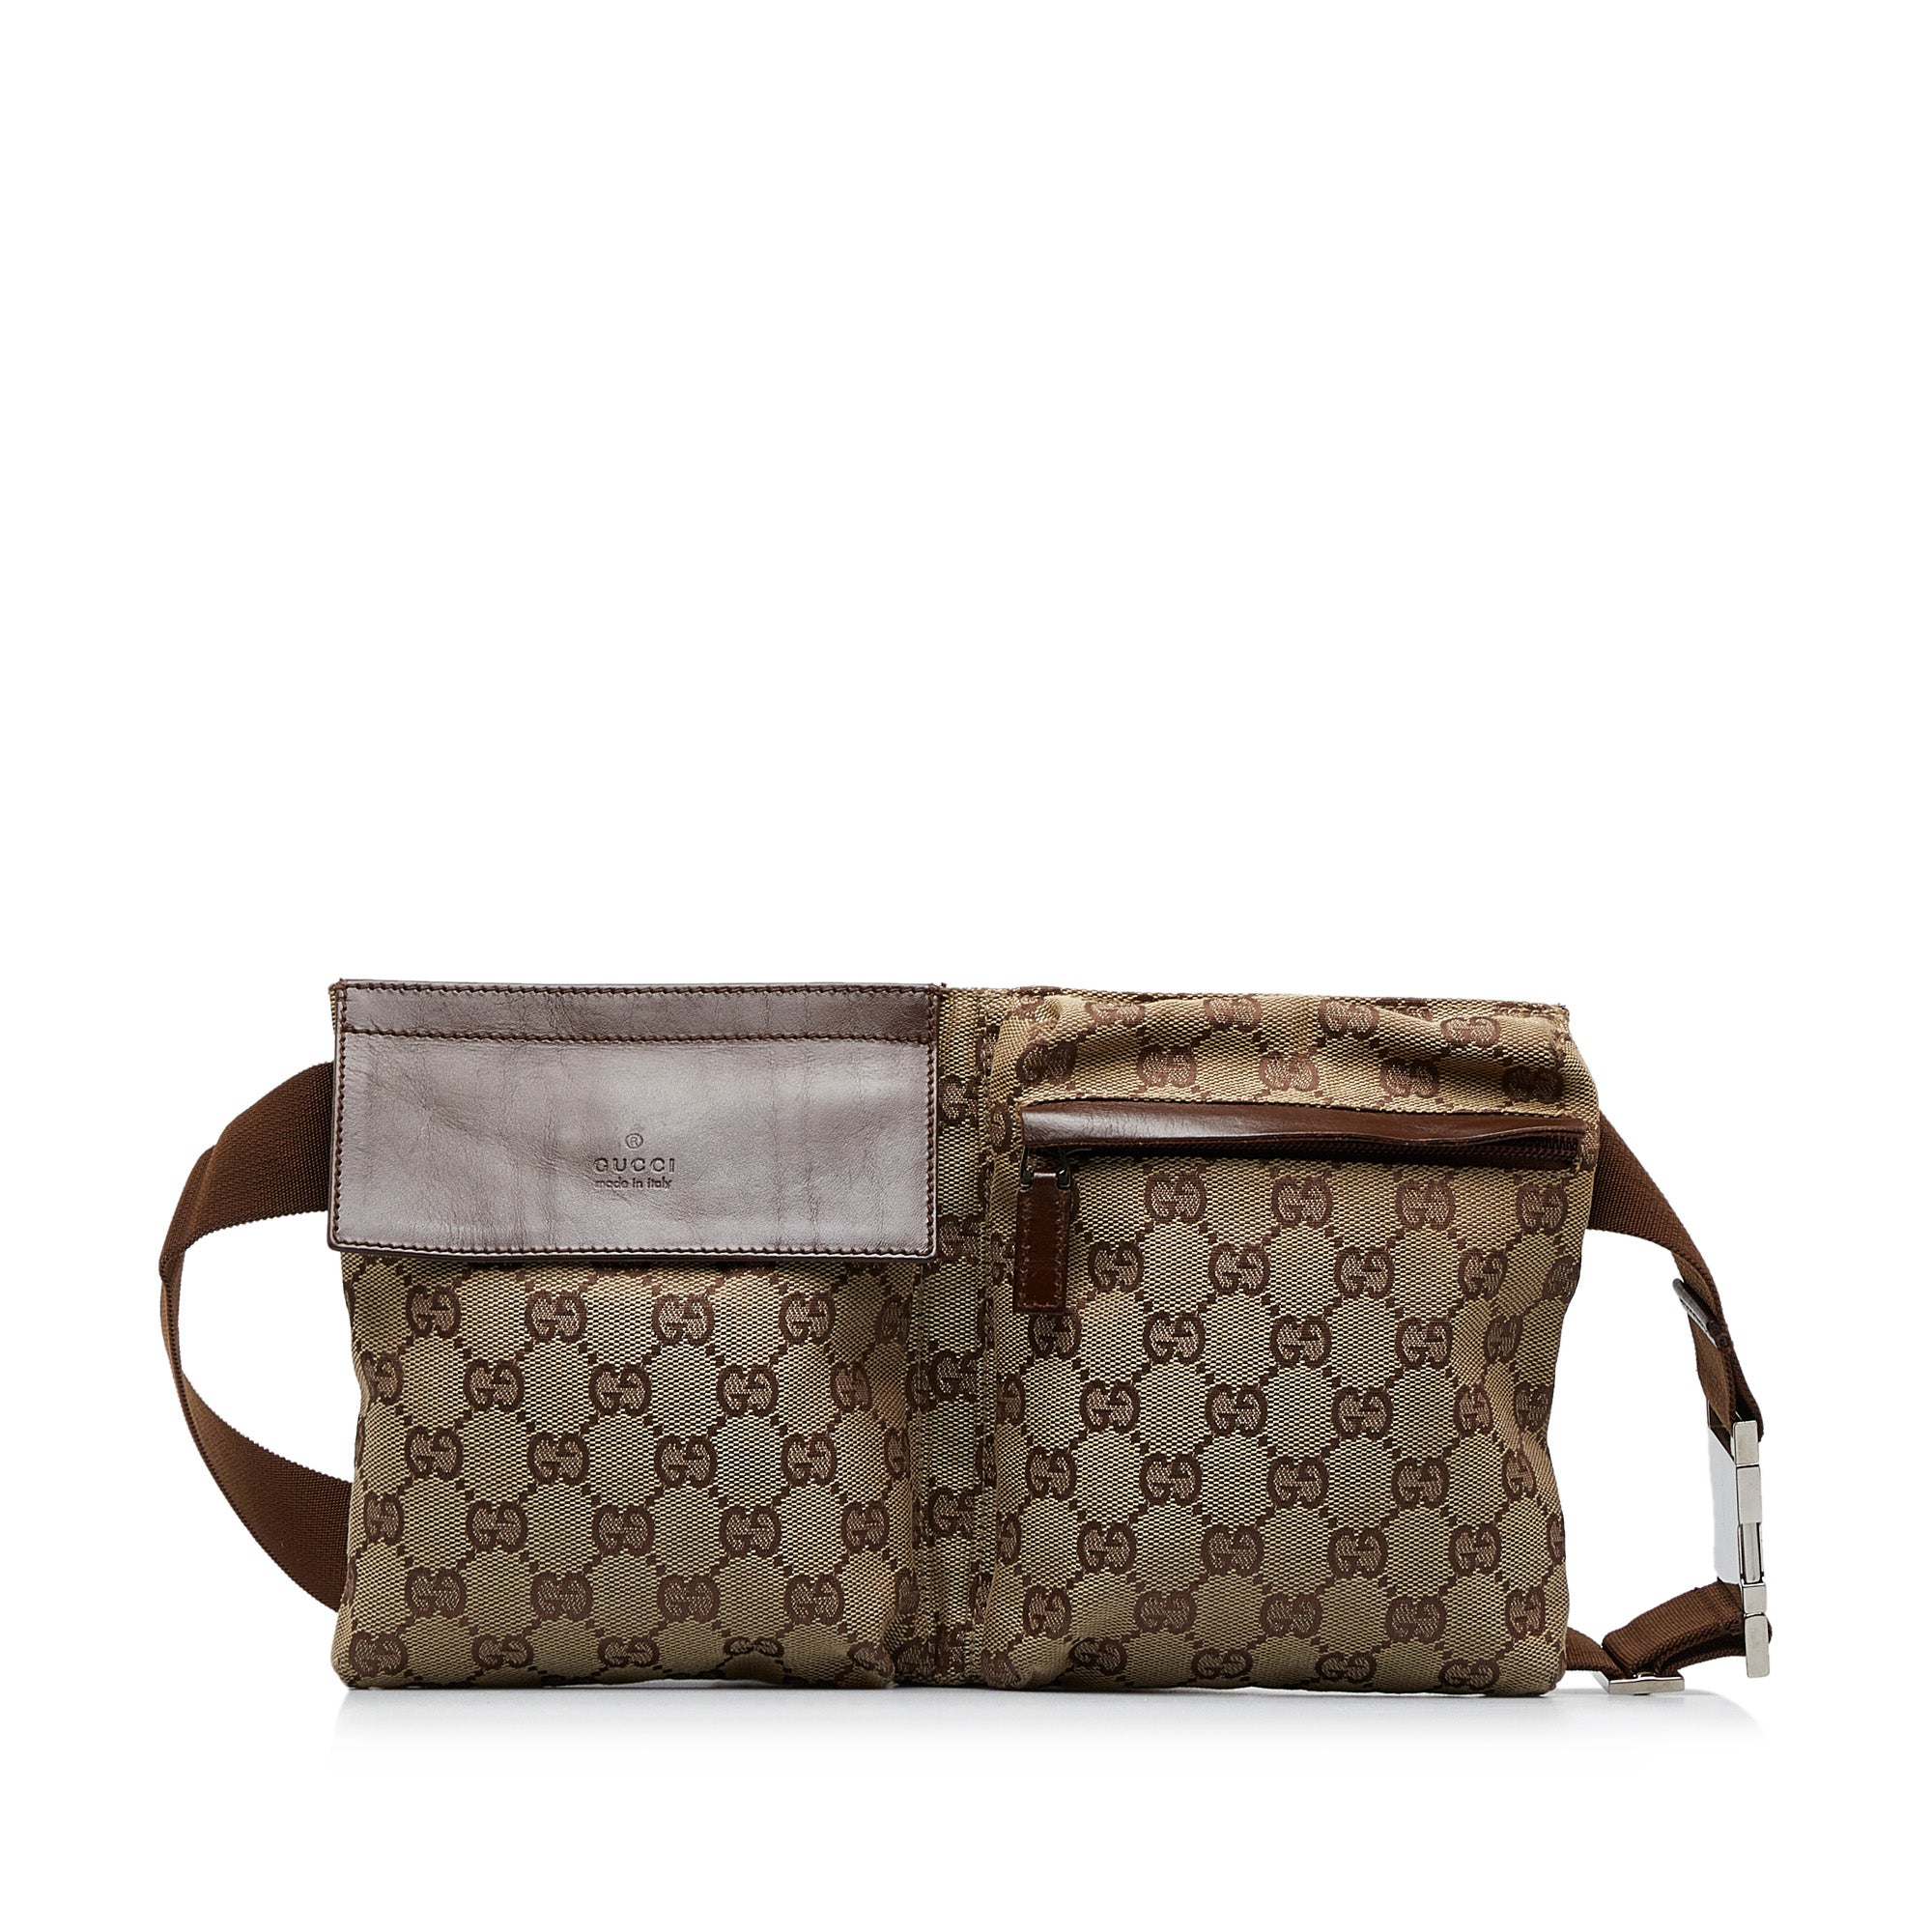 GG Supreme Canvas Belt Bag in Brown - Gucci